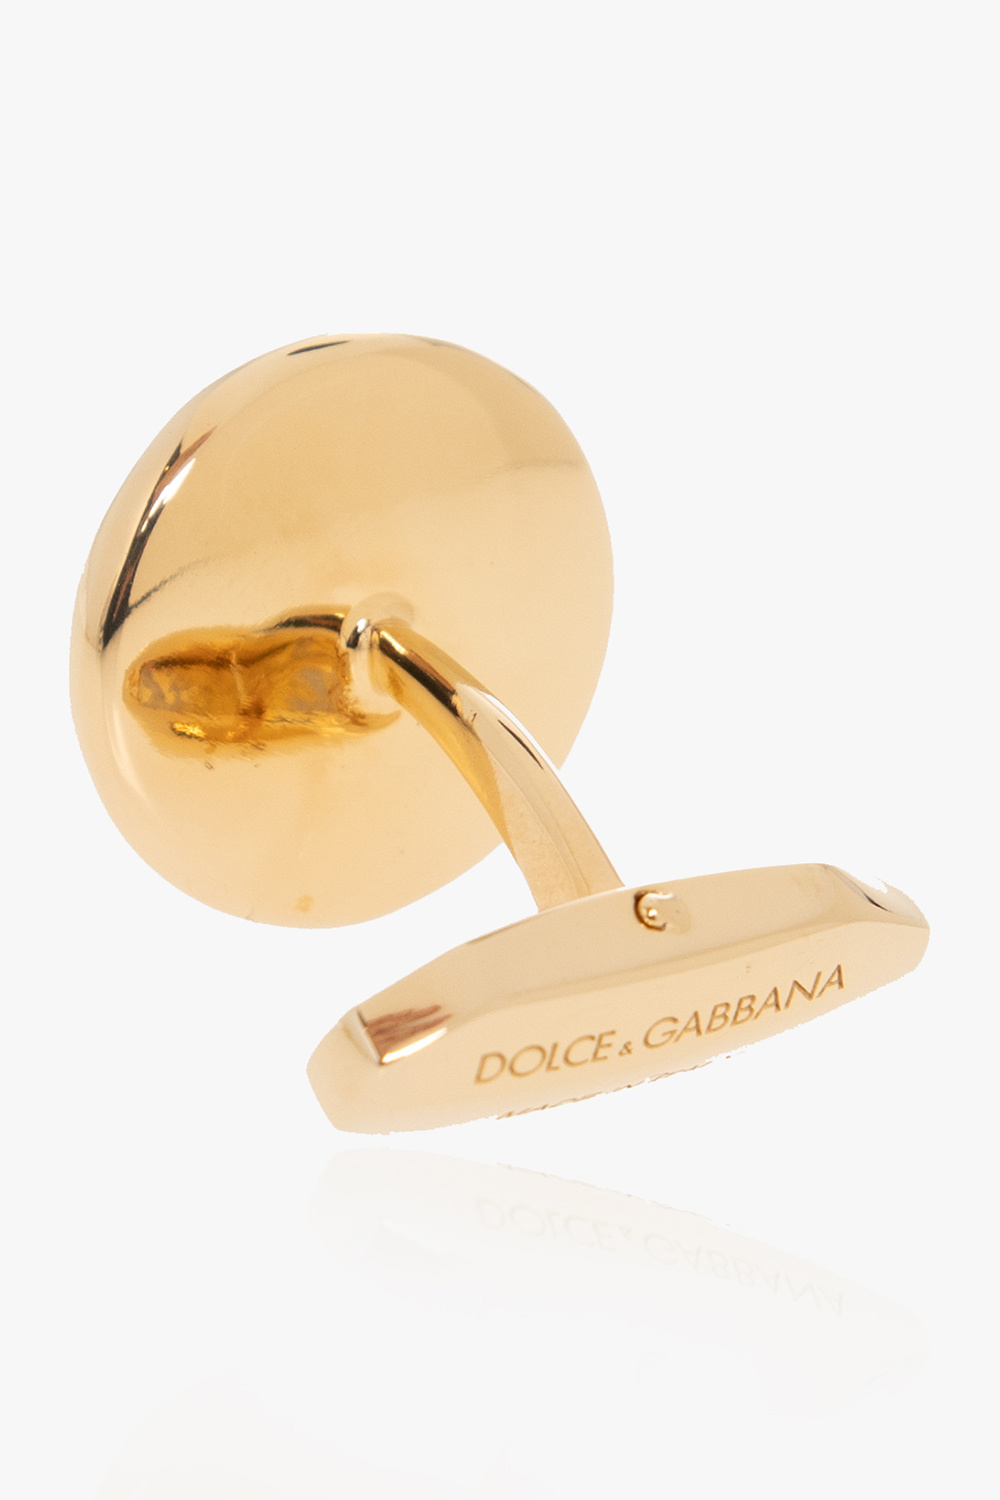 dolce small & Gabbana Brass cuff links